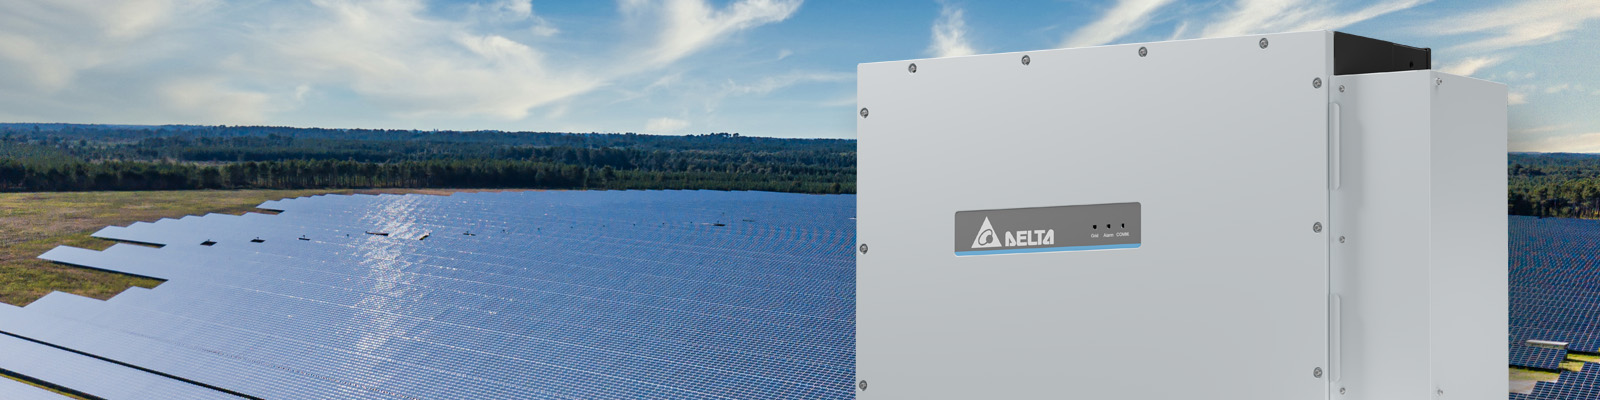 M225HV per impianti solari fotovoltaici a terra